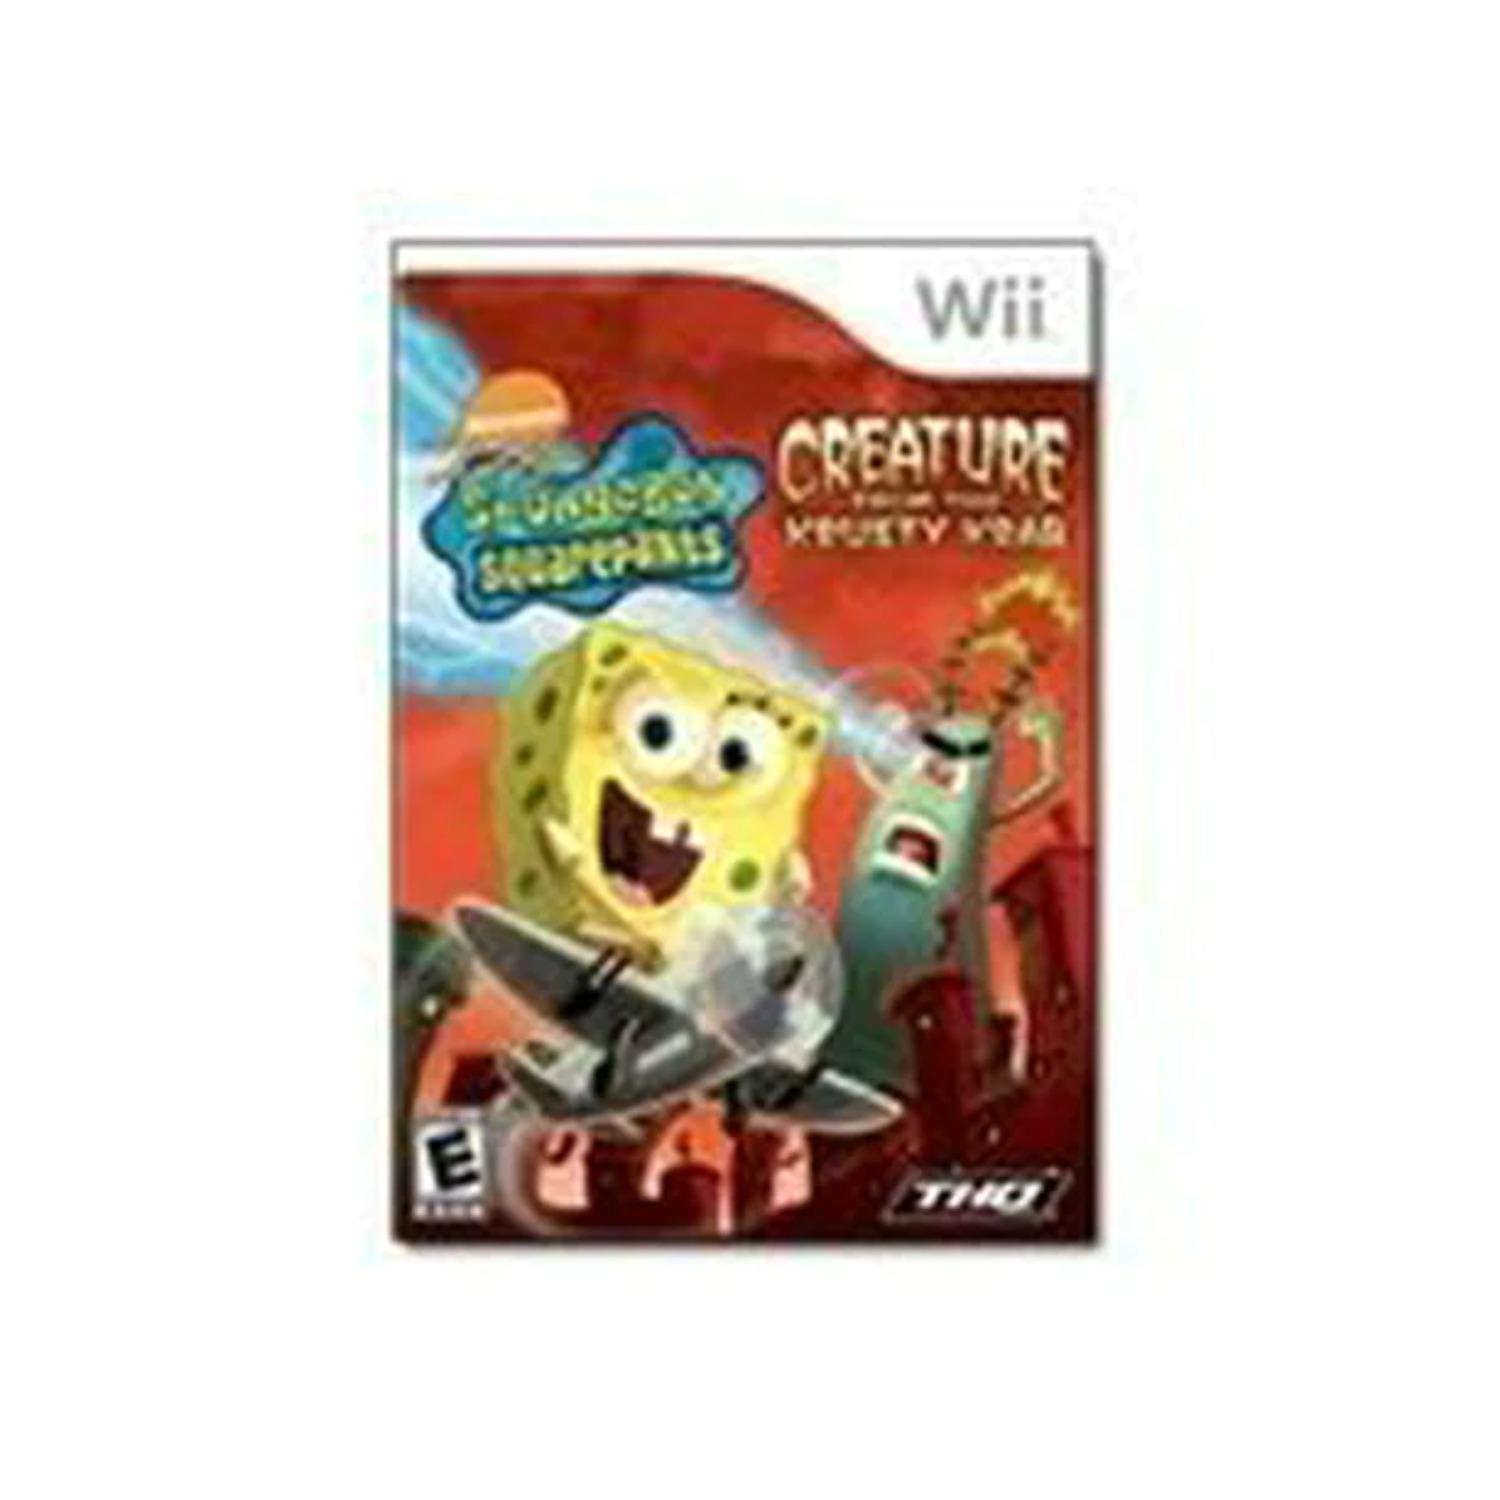 SpongeBob SquarePants: Creature from the Krusty Krab - Nintendo Wii - image 1 of 2